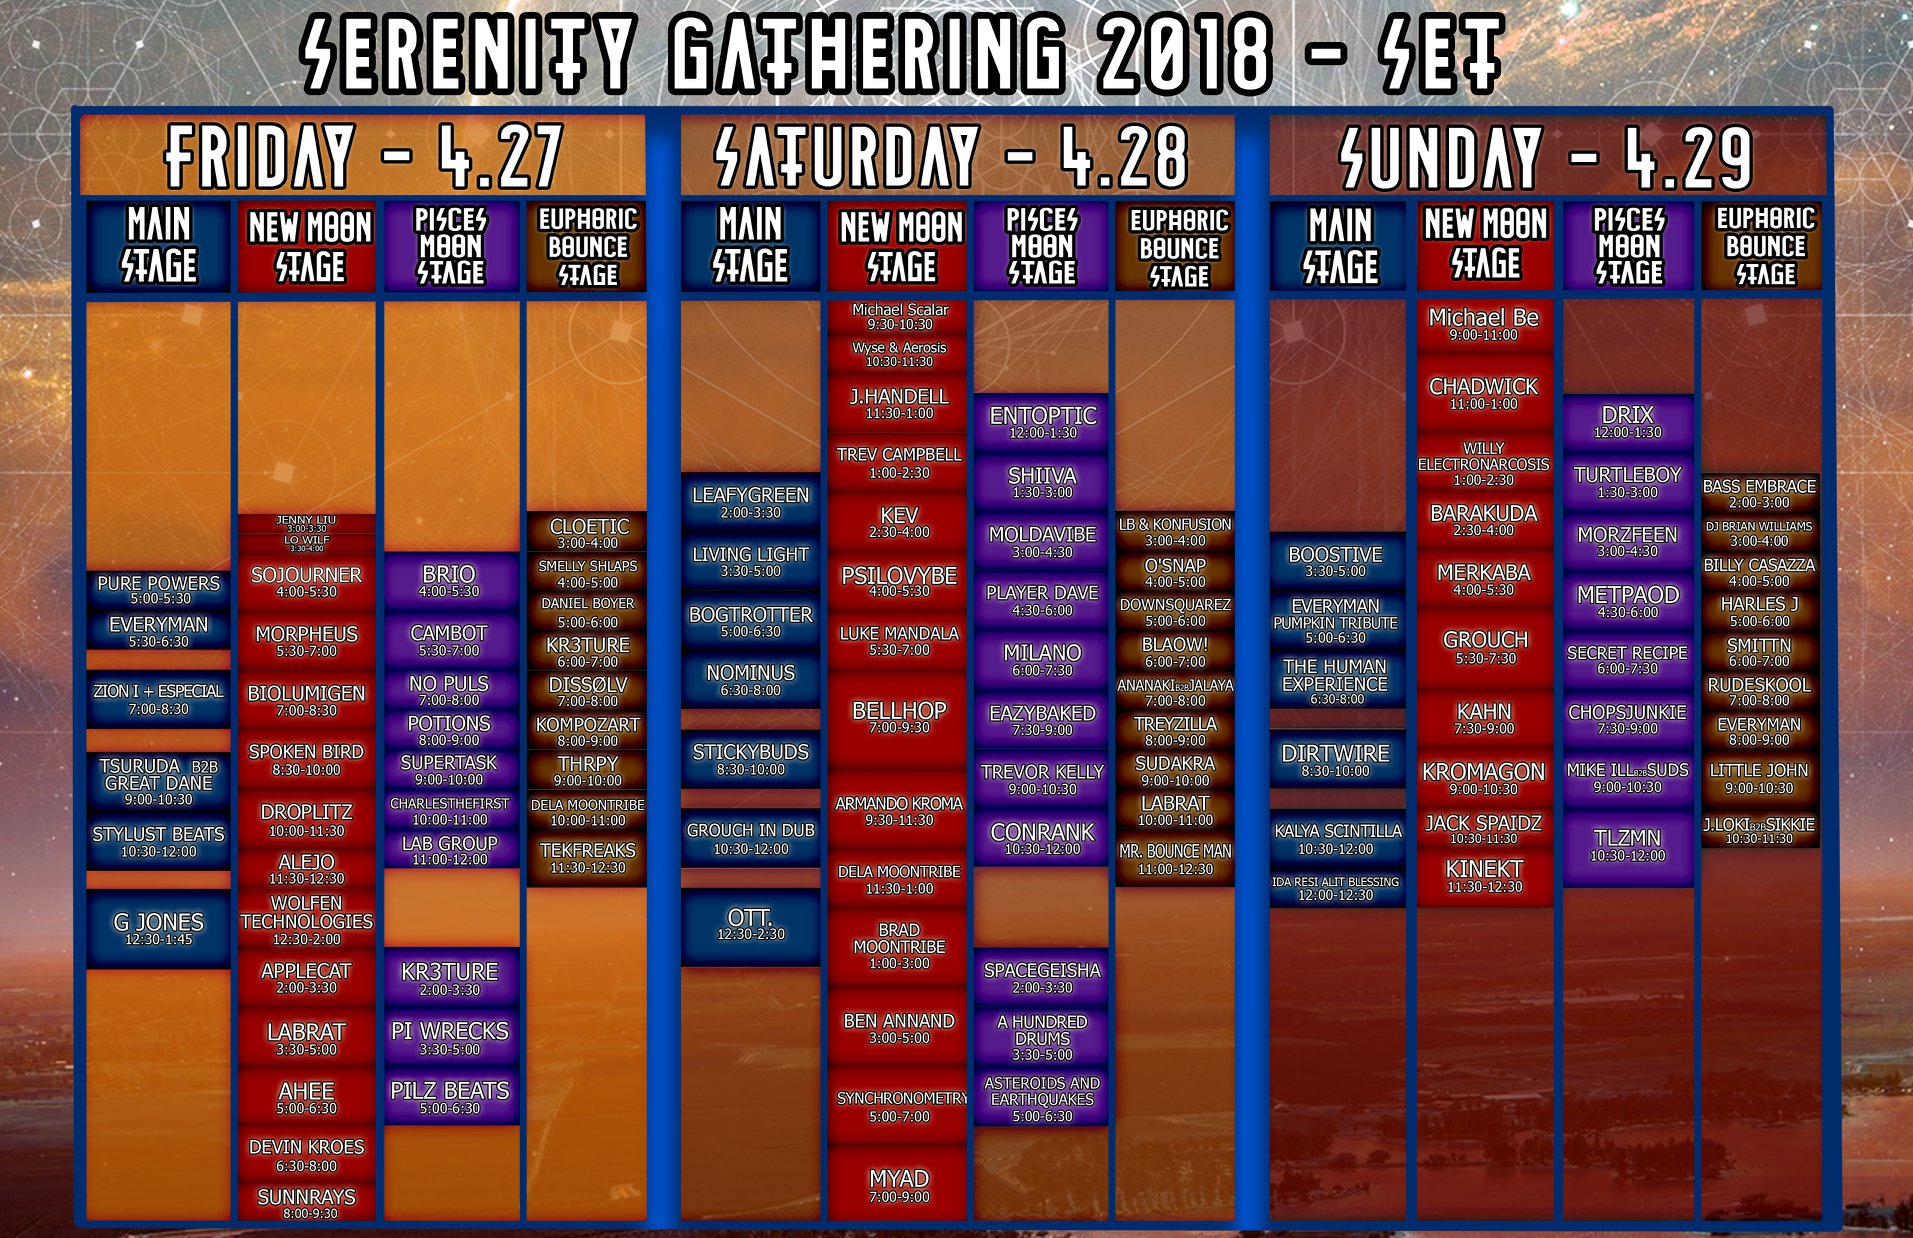 Serenity Gathering 2018 Set Times